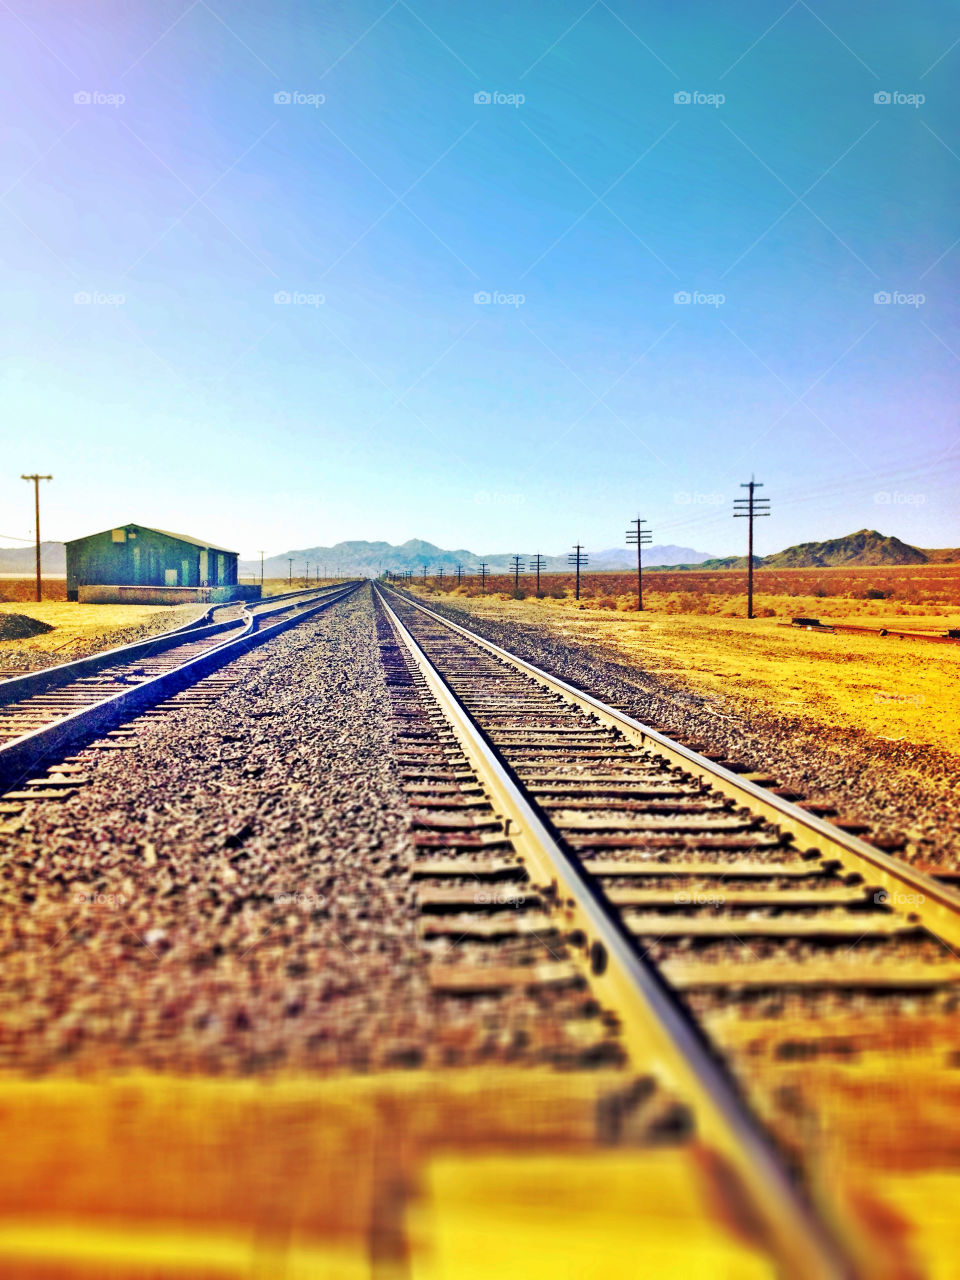 Railway, Railroad Track, Transportation System, Locomotive, Travel